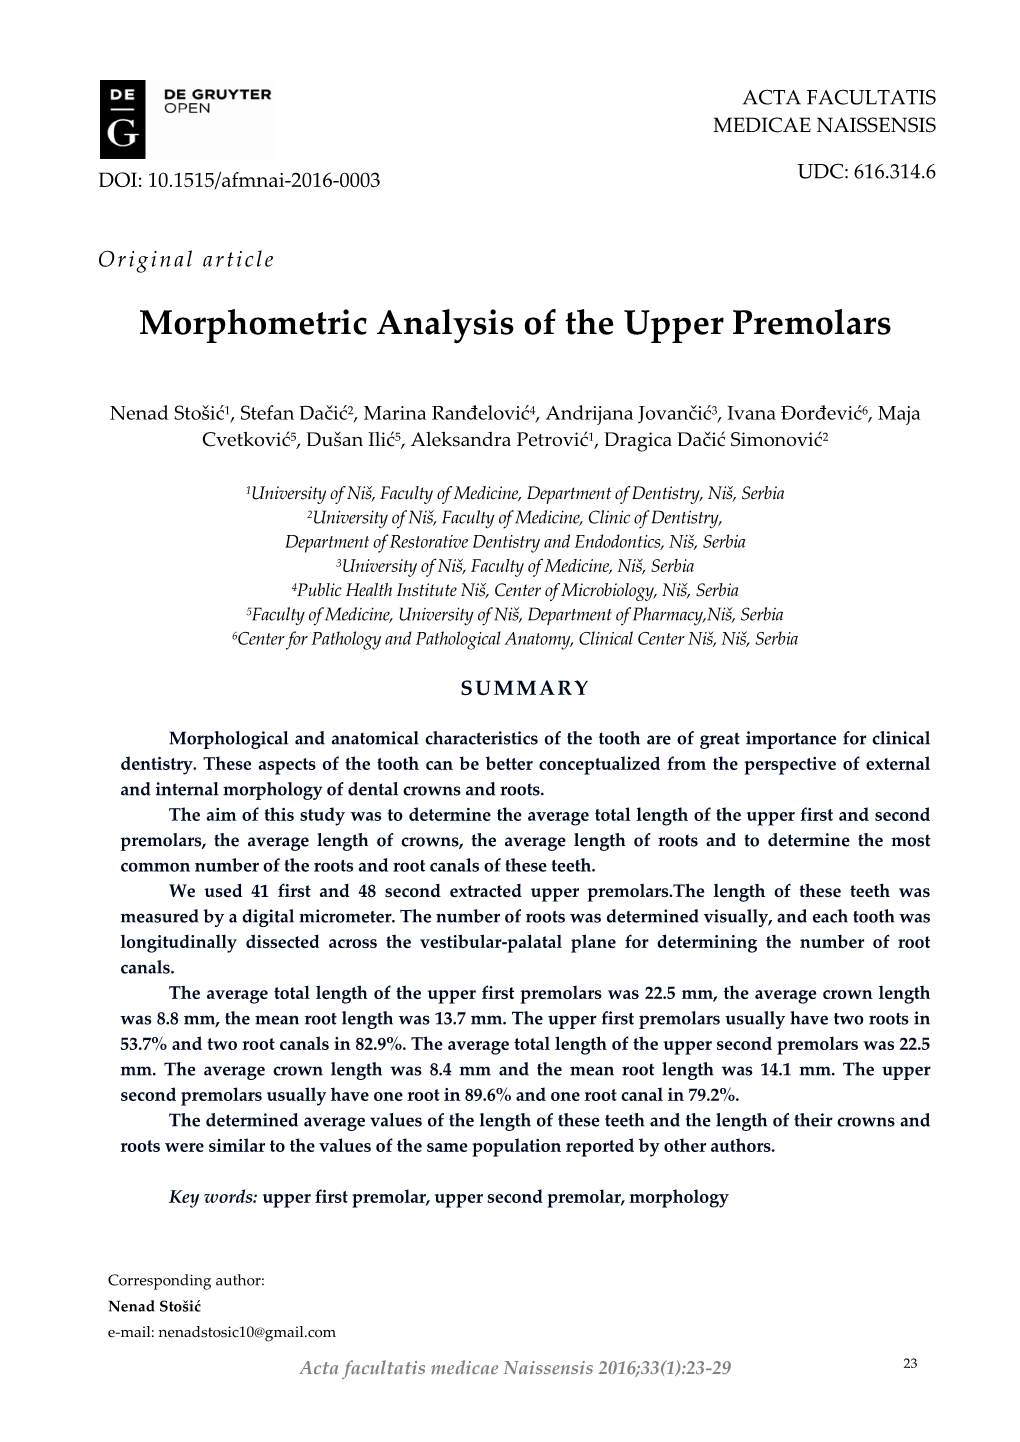 Morphometric Analysis of the Upper Premolars